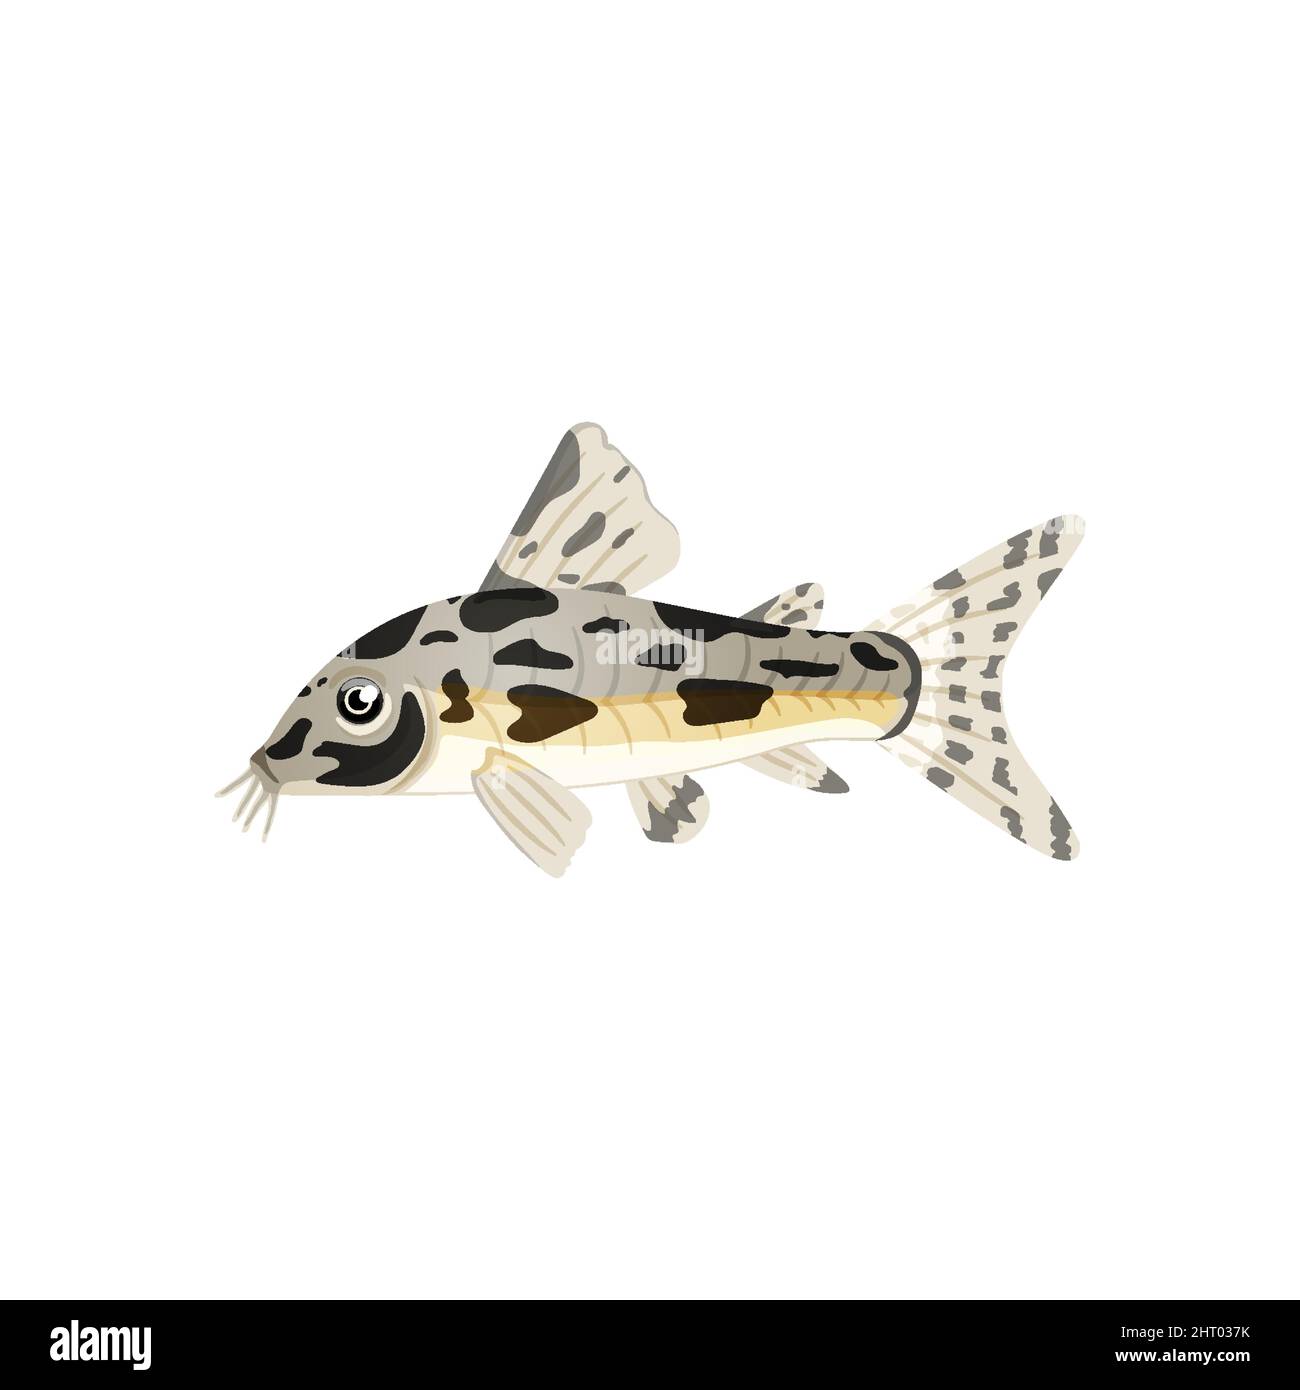 Aquarium catfish,single illustration of freshwater fish in realistic cartoon. Stock Vector